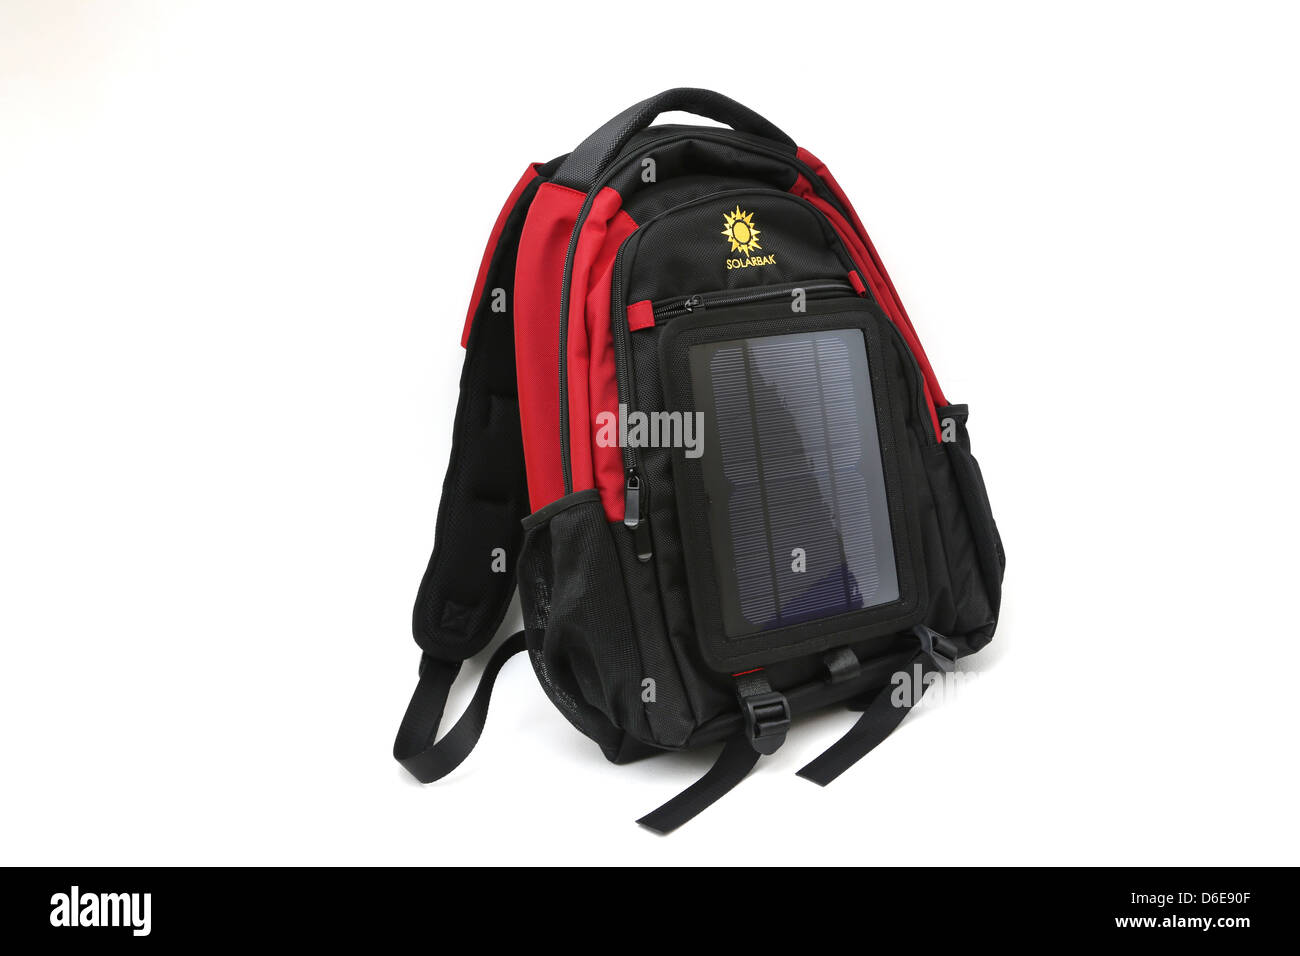 Solarbak Solar Backpack With Solar Panel Stock Photo